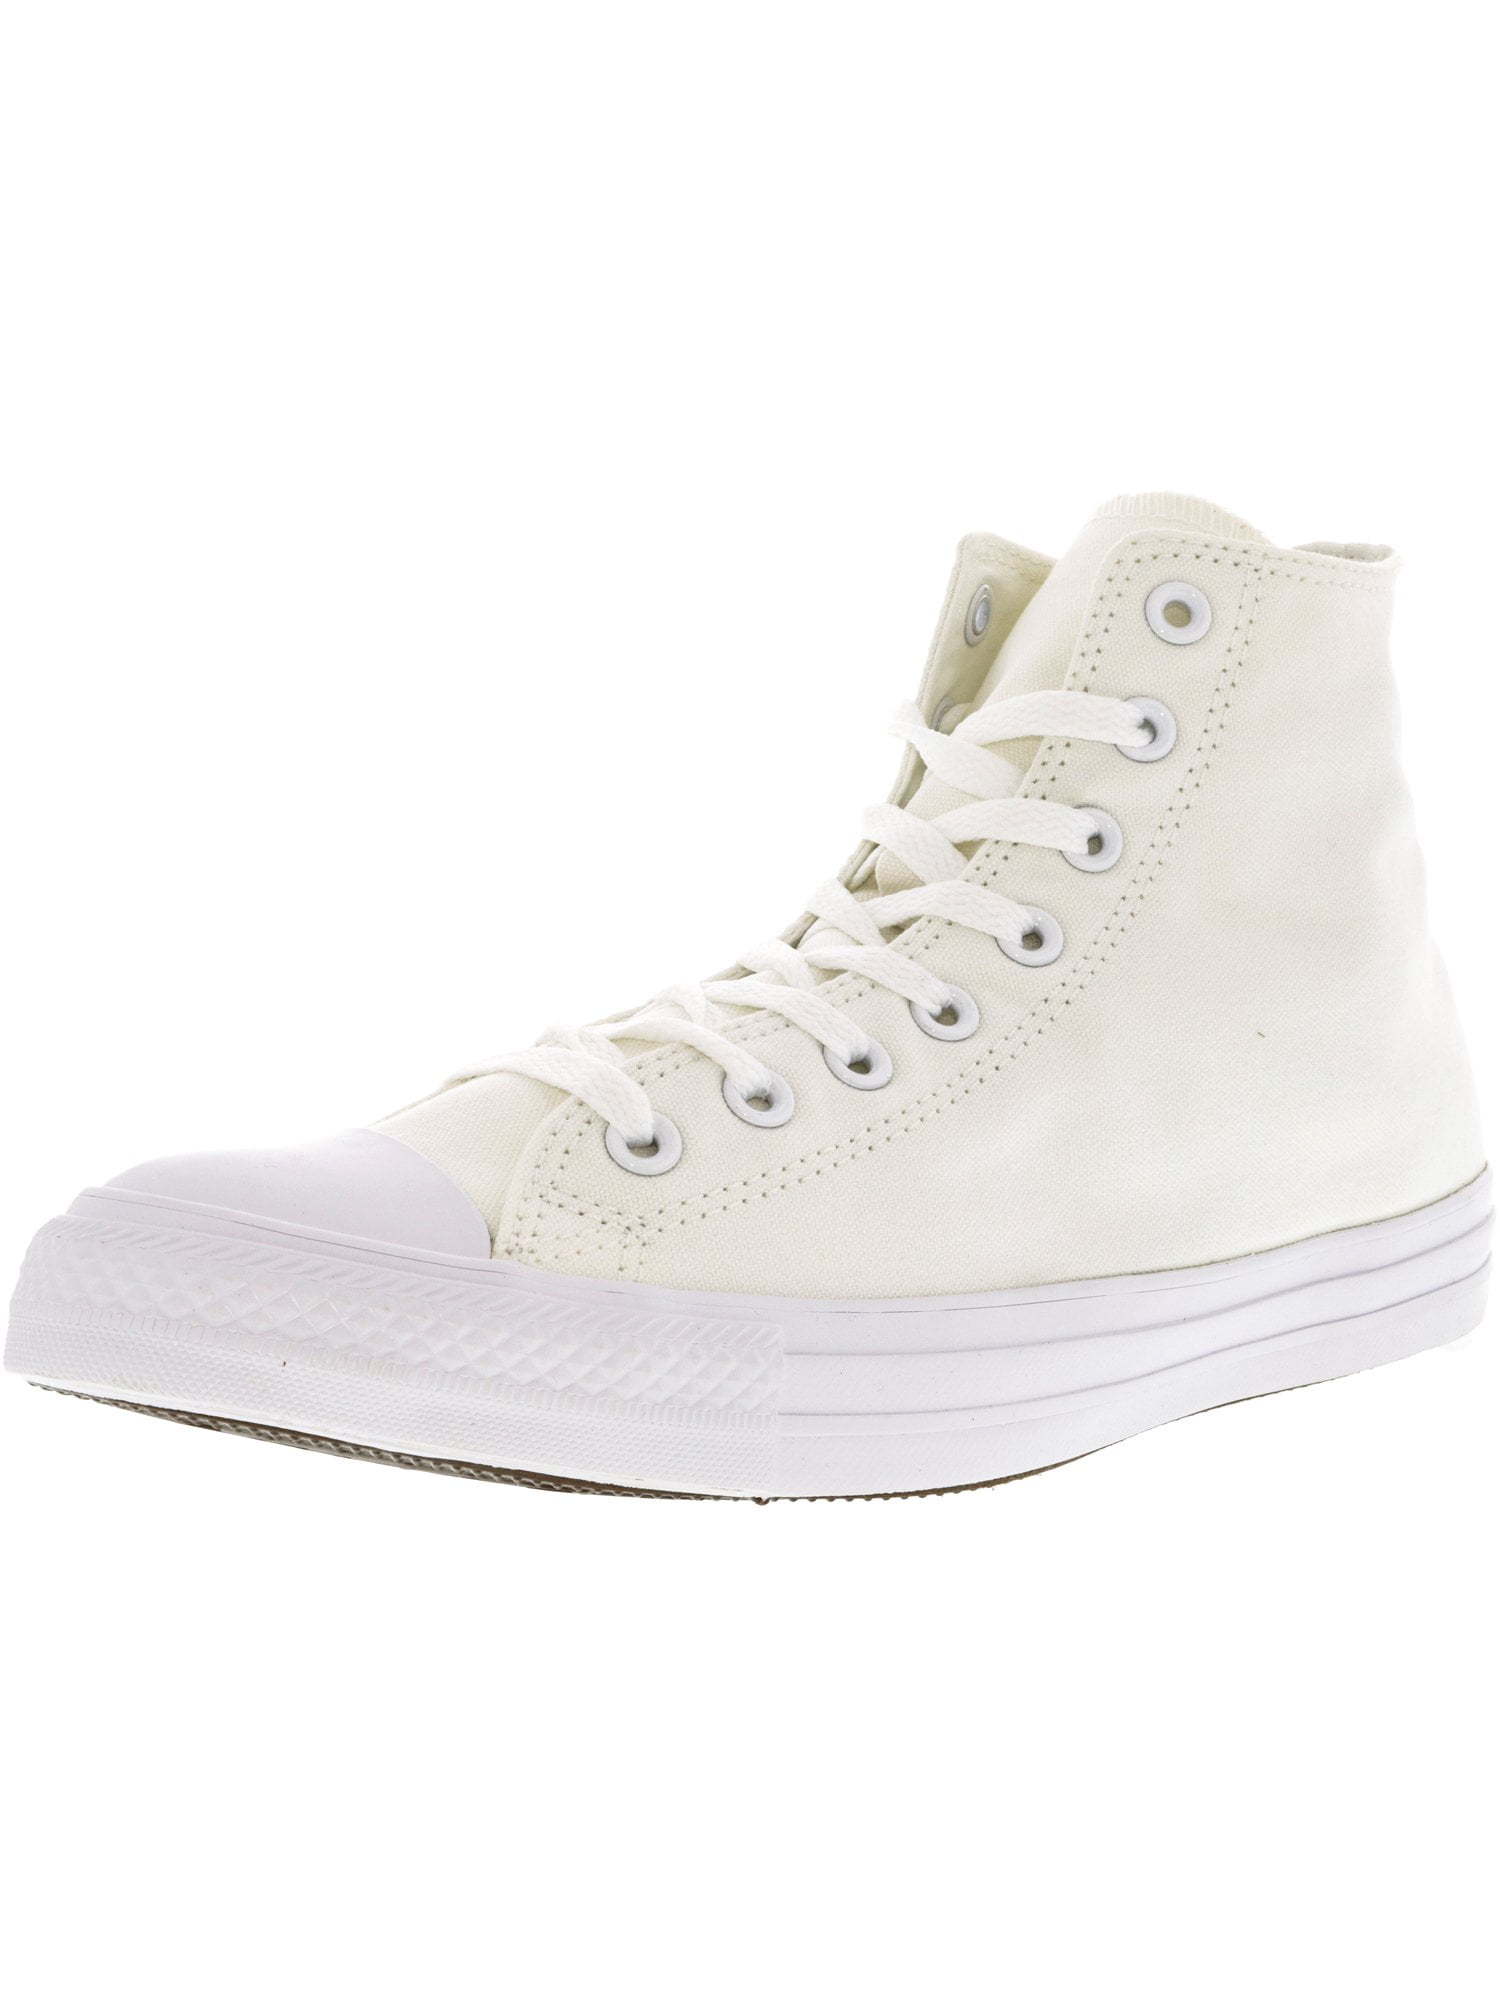 Converse Men's All Star Hi White / Ankle-High Fabric Tennis Shoe - 10M ...